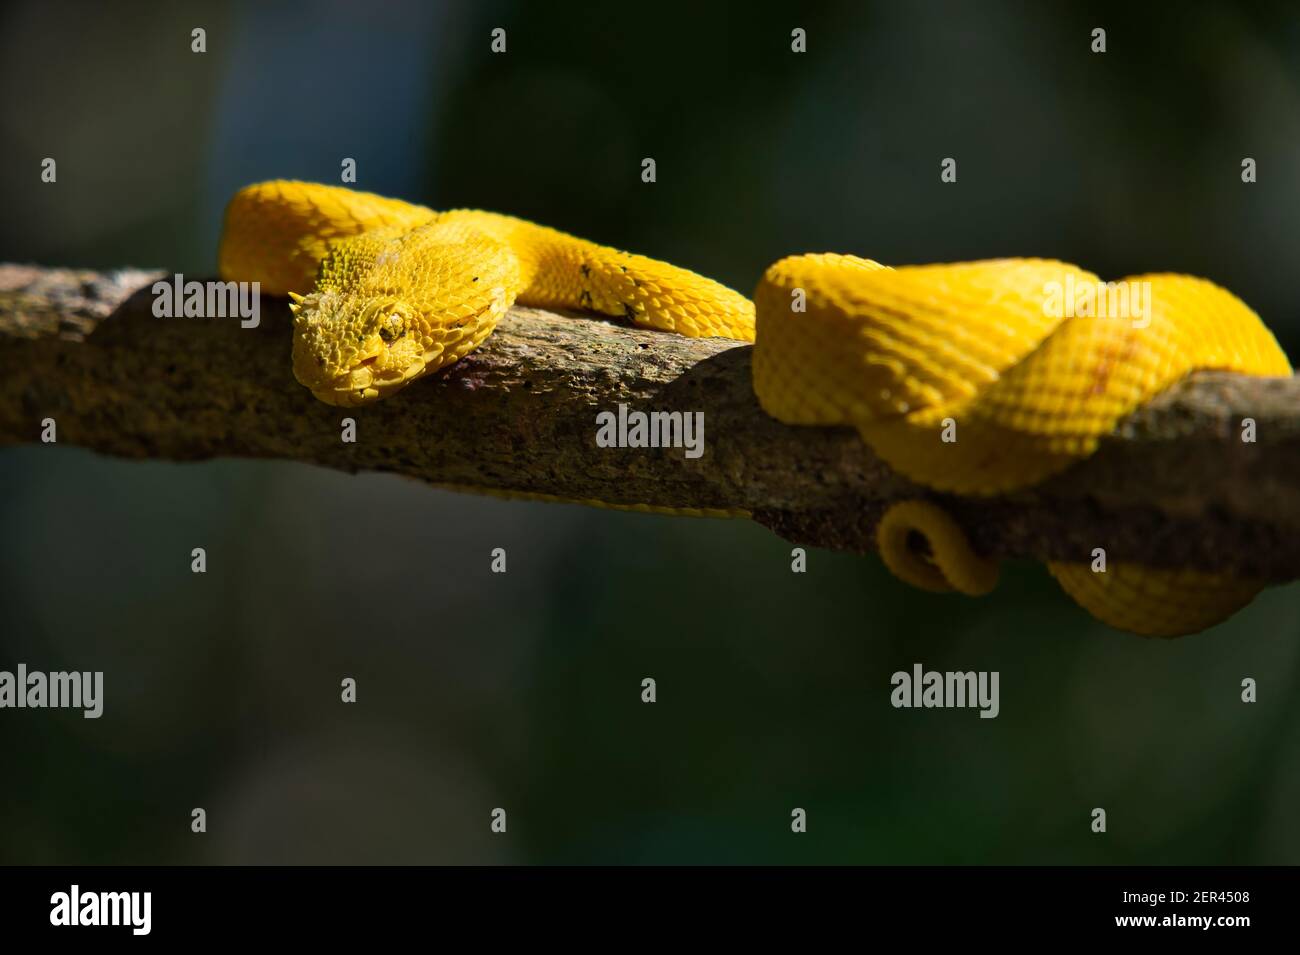 deadly toxic eyelash viper snake in Costa Rica Stock Photo